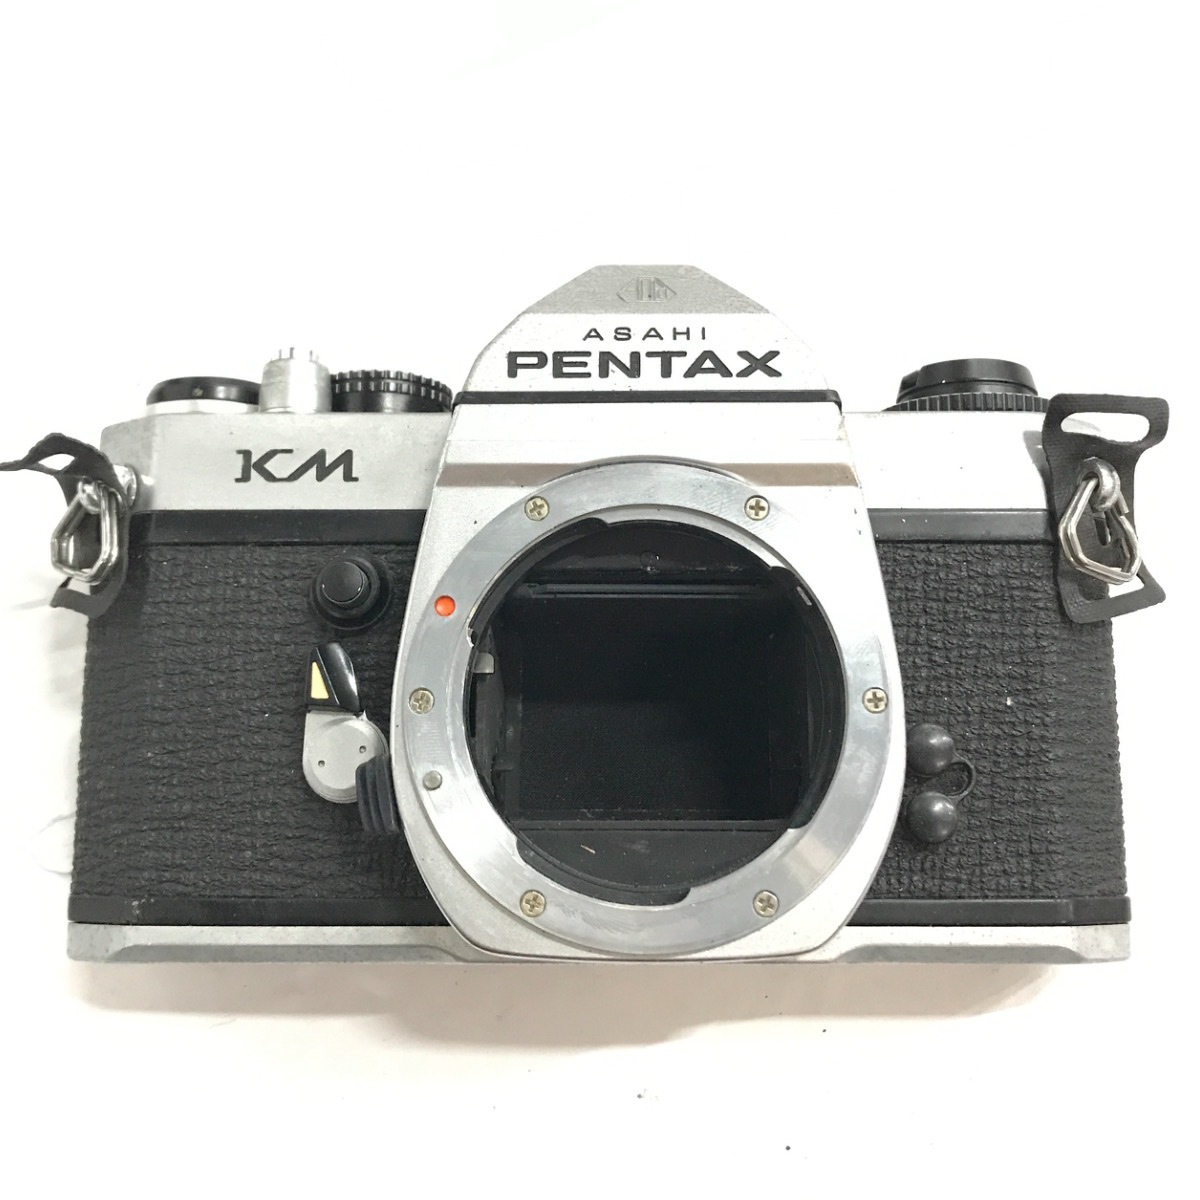 1 jpy CANON Canonet QL17 PENTAX KM MINOLTA SRT101 Nikon Nikomat EL contains camera lens set 